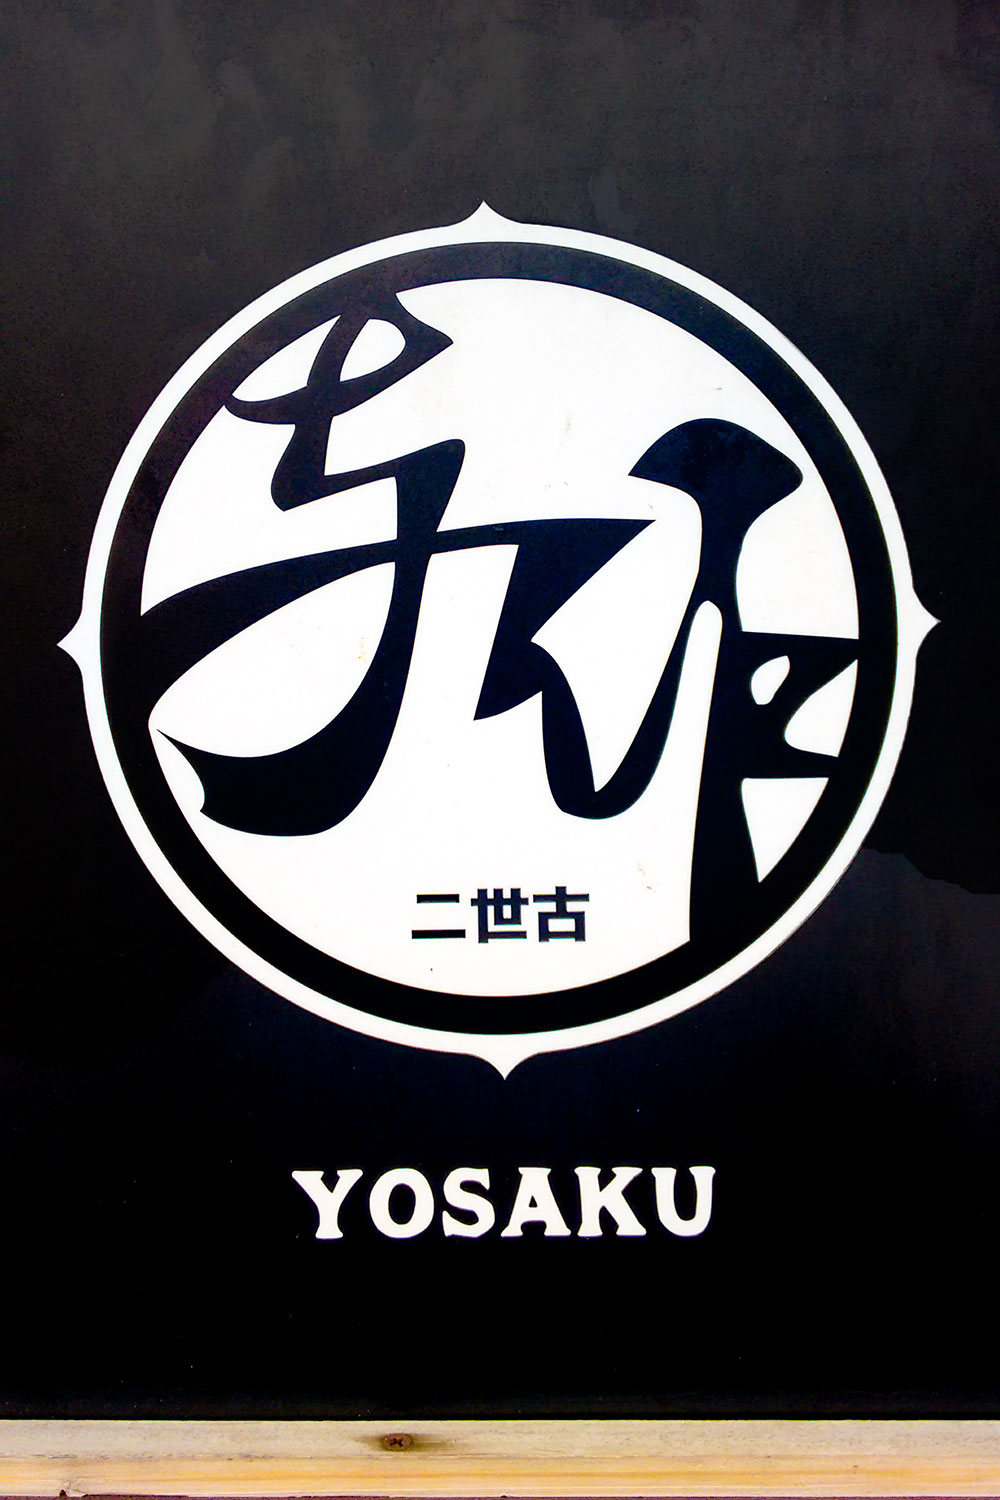 Simple black and white crest of Yosaku Iazakaya